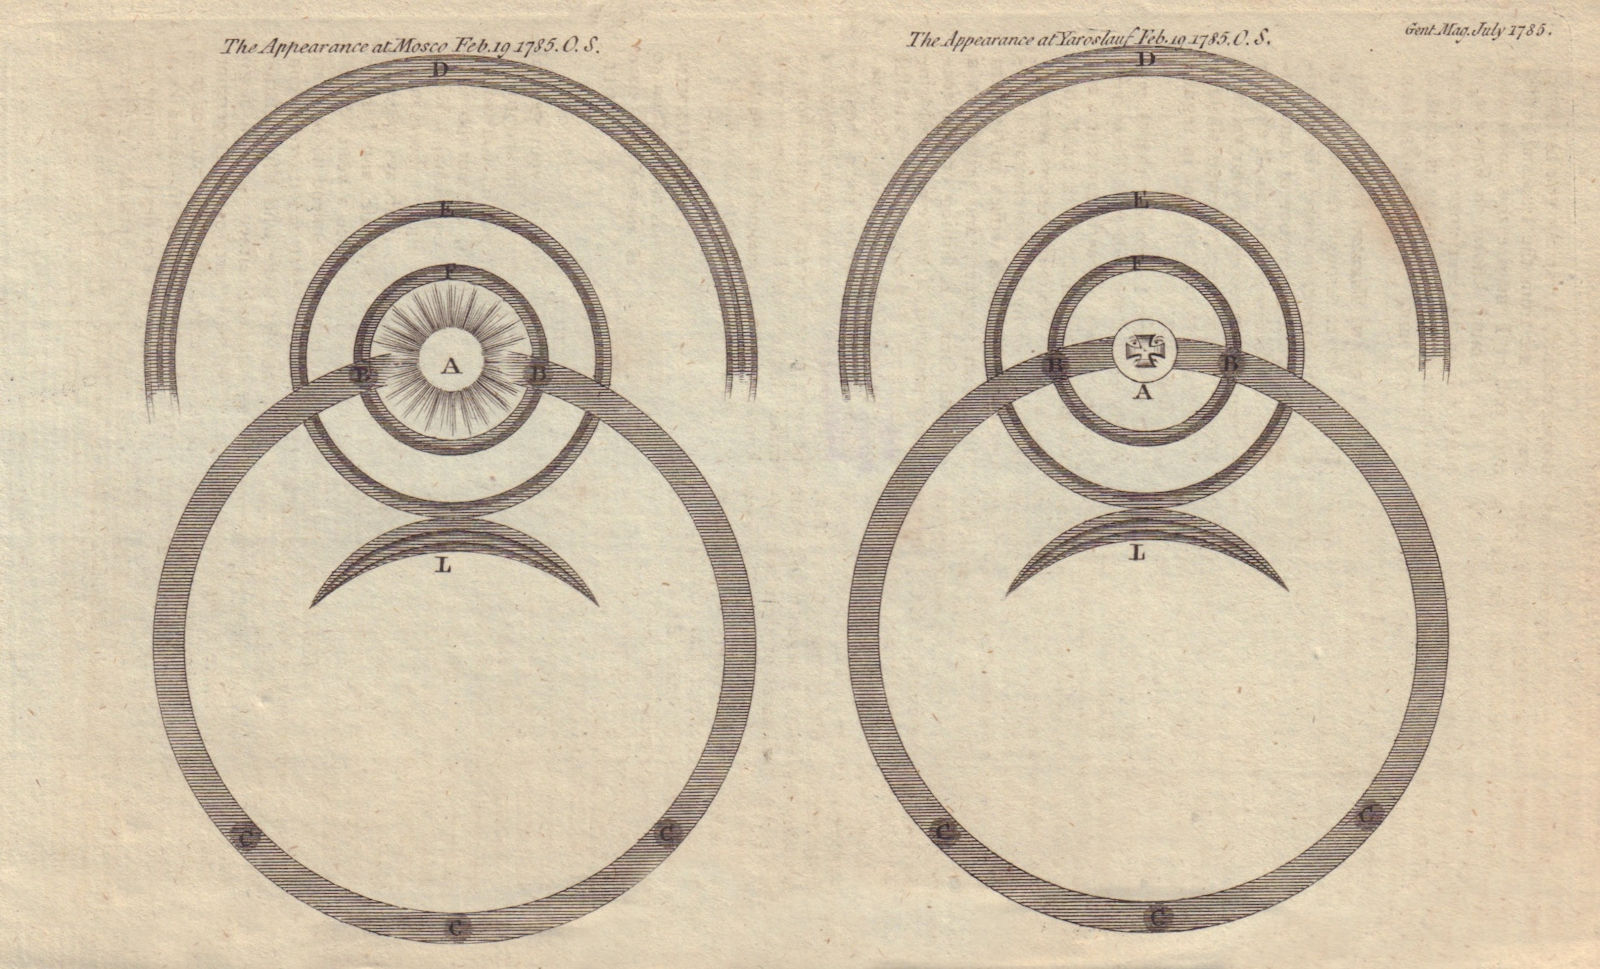 Solar halos seen in Russia 19 Feb 1785. At Moscow & Yaroslavl. Sun 1785 print